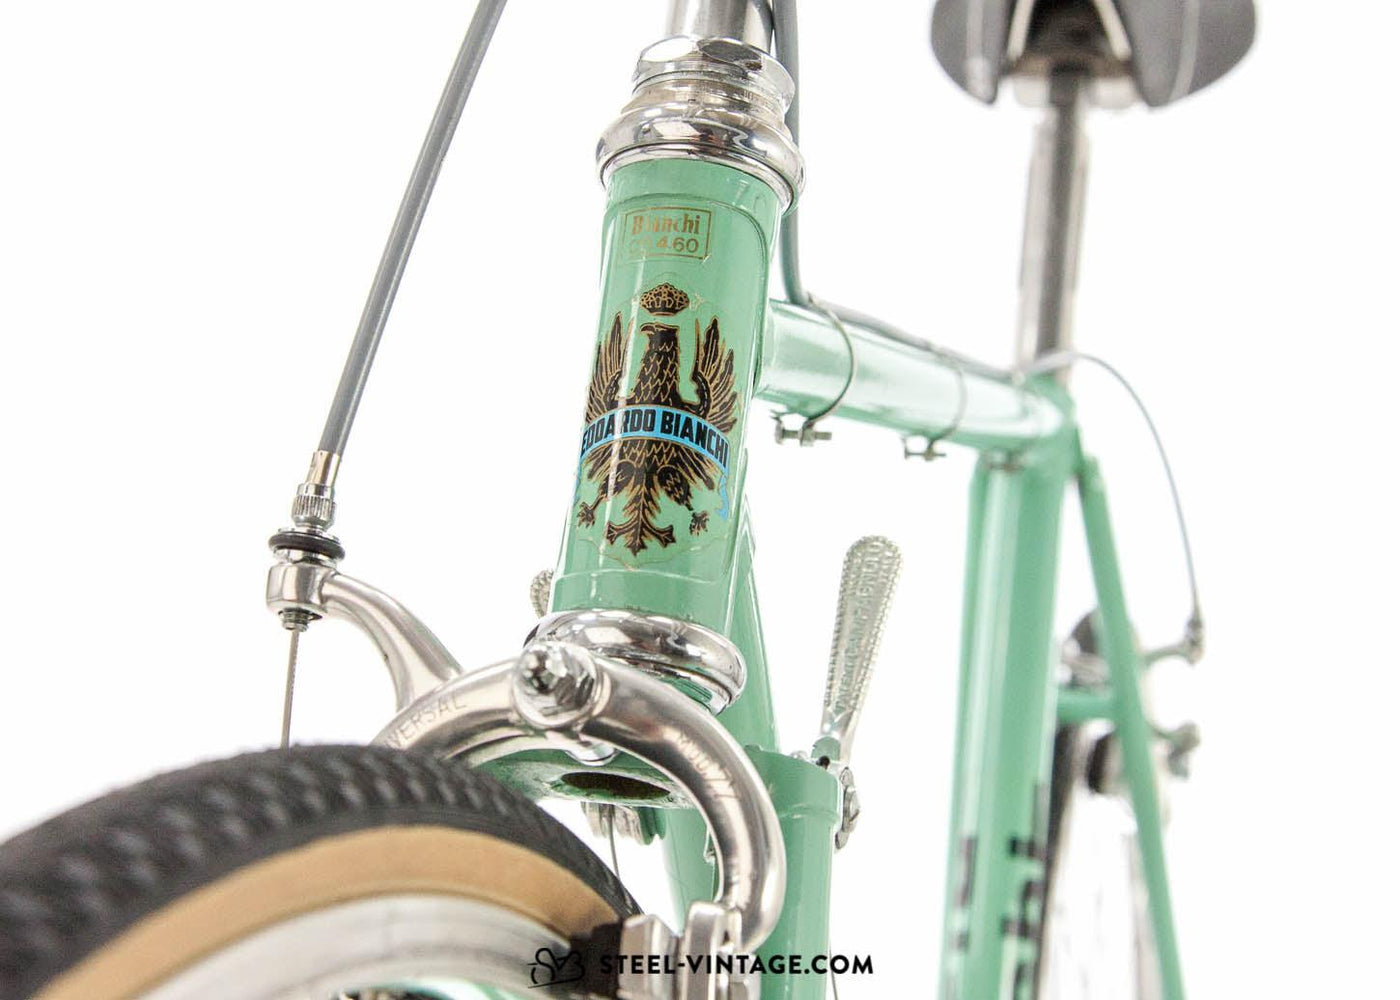 Bianchi Rekord 748 Classic Road Bike 1970s - Steel Vintage Bikes